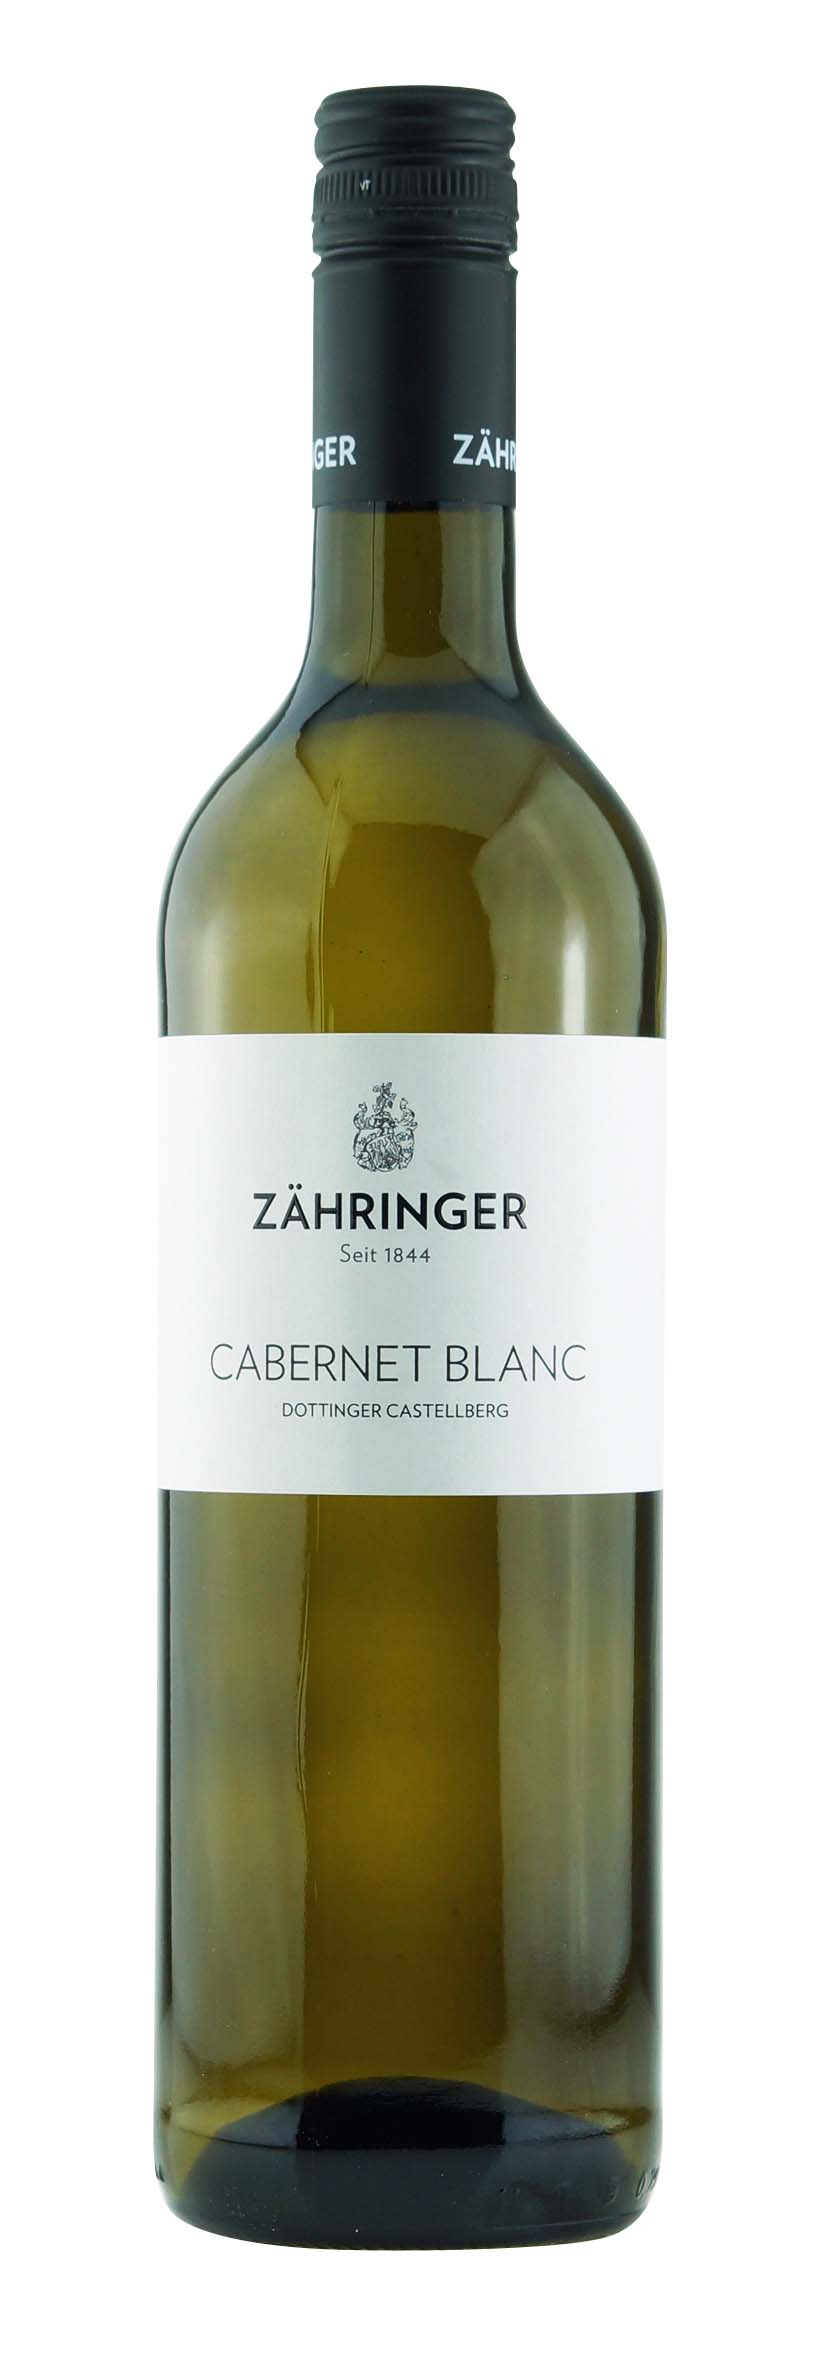 Dottinger Castellberg Cabernet Blanc 2015